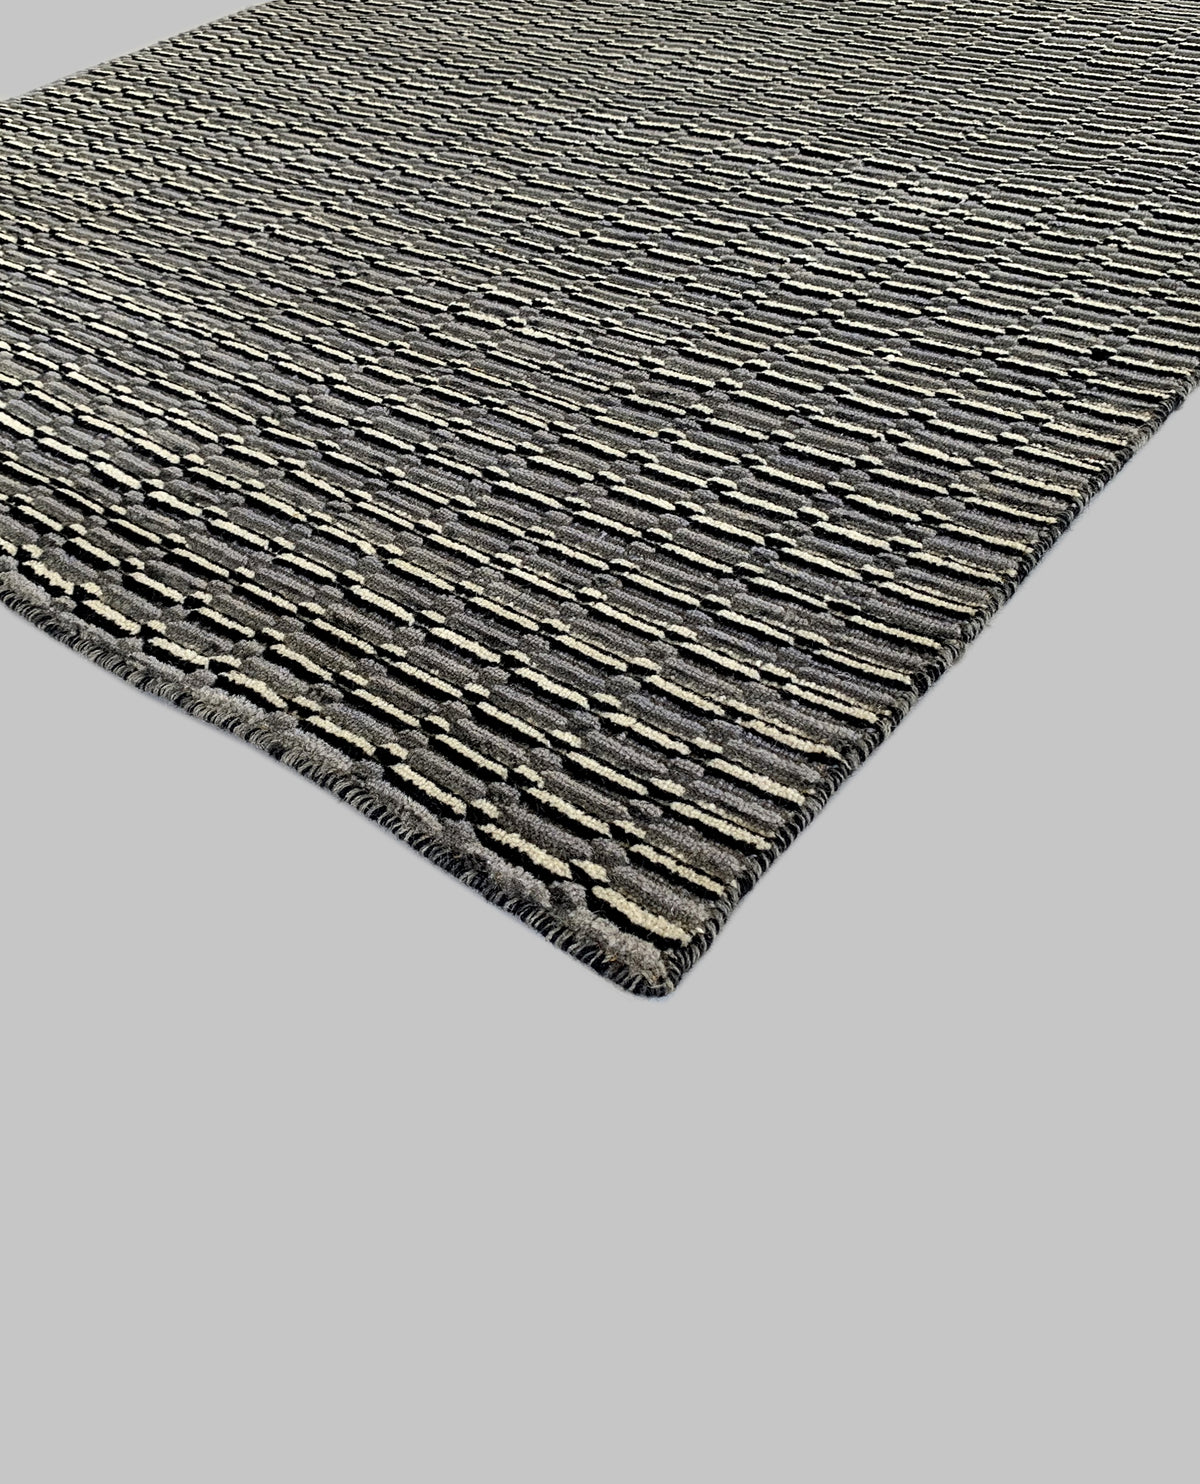 Rugslane Plain Textured Woolen Box Design Grey Carpet 4.6ft X 6.6ft